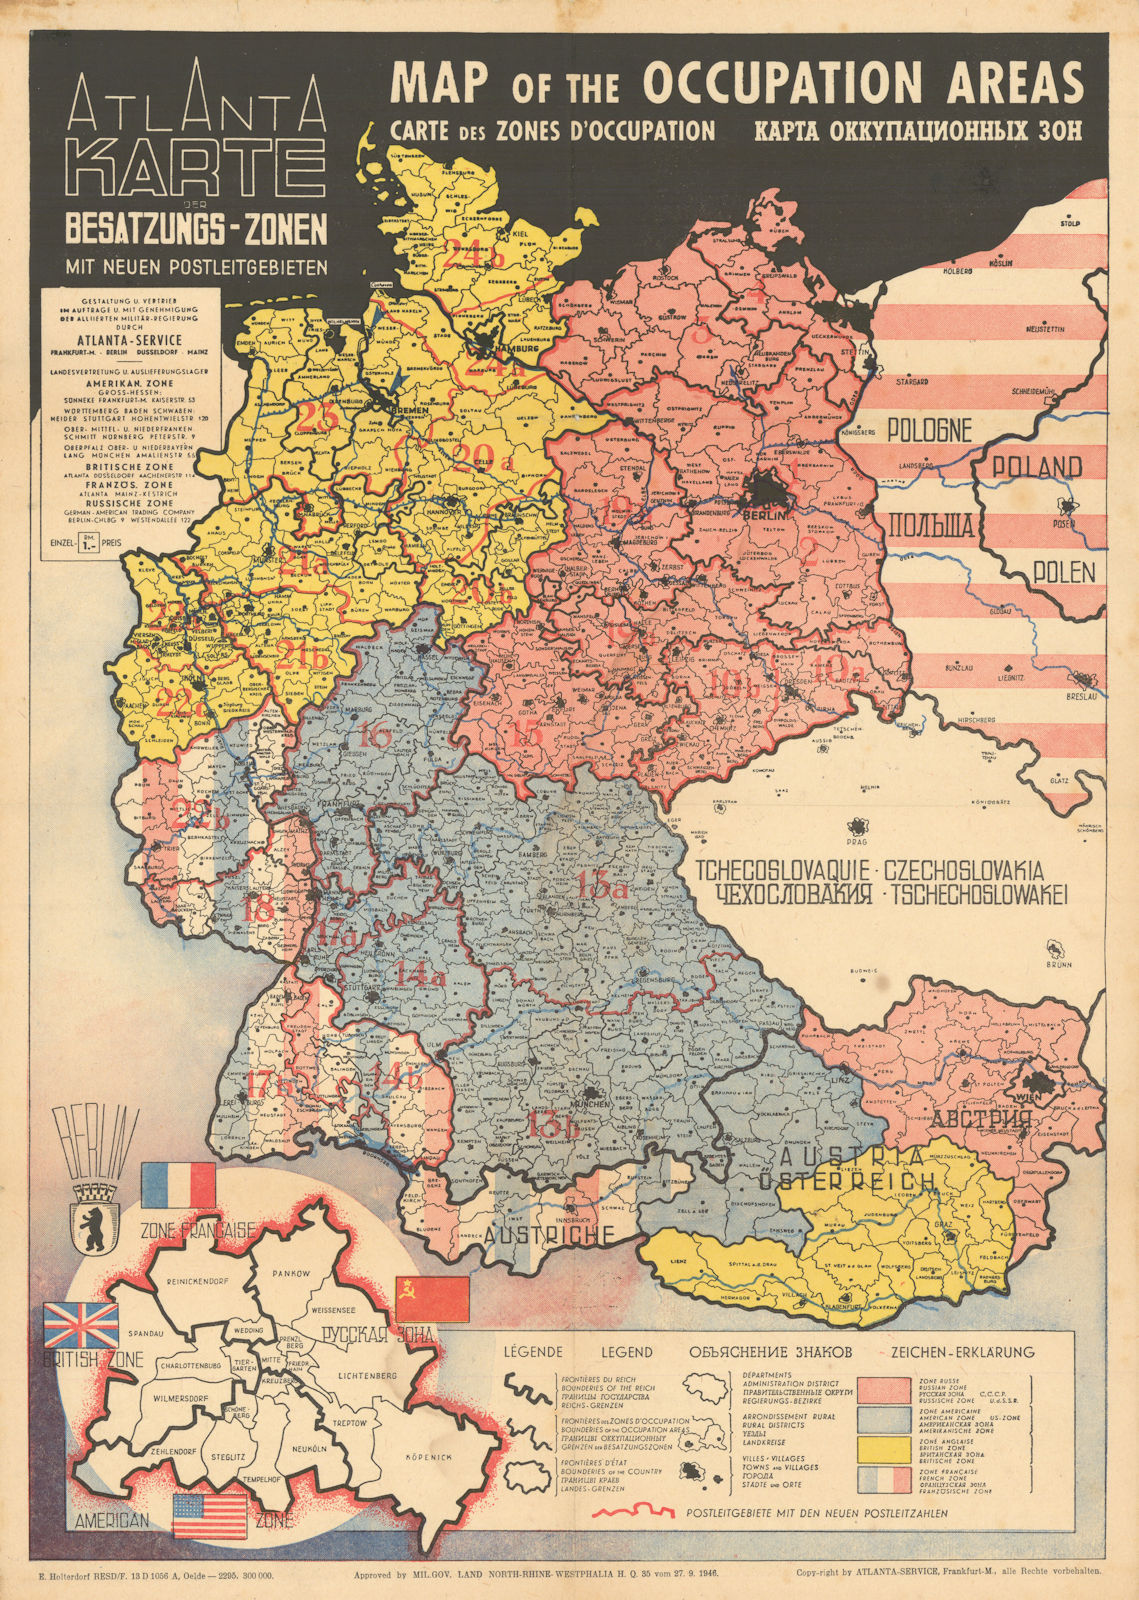 Atlanta Karte der Besatzungs-Zonen. Map of the Occupation Areas of Germany 1946